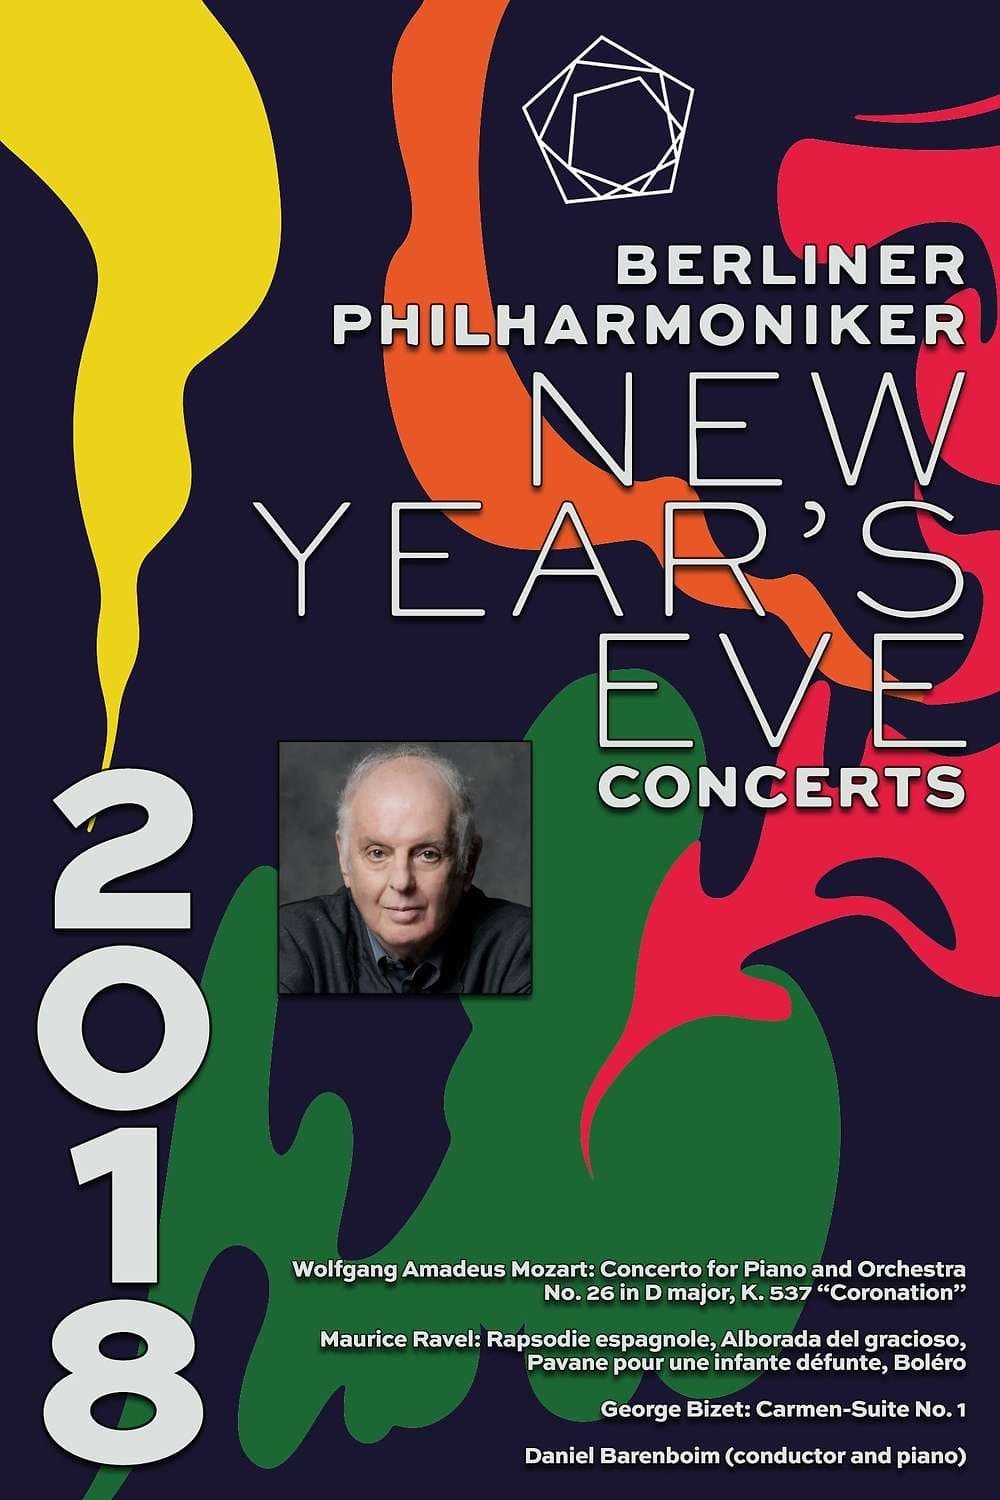 The Berliner Philharmoniker’s New Year’s Eve Concert: 2018